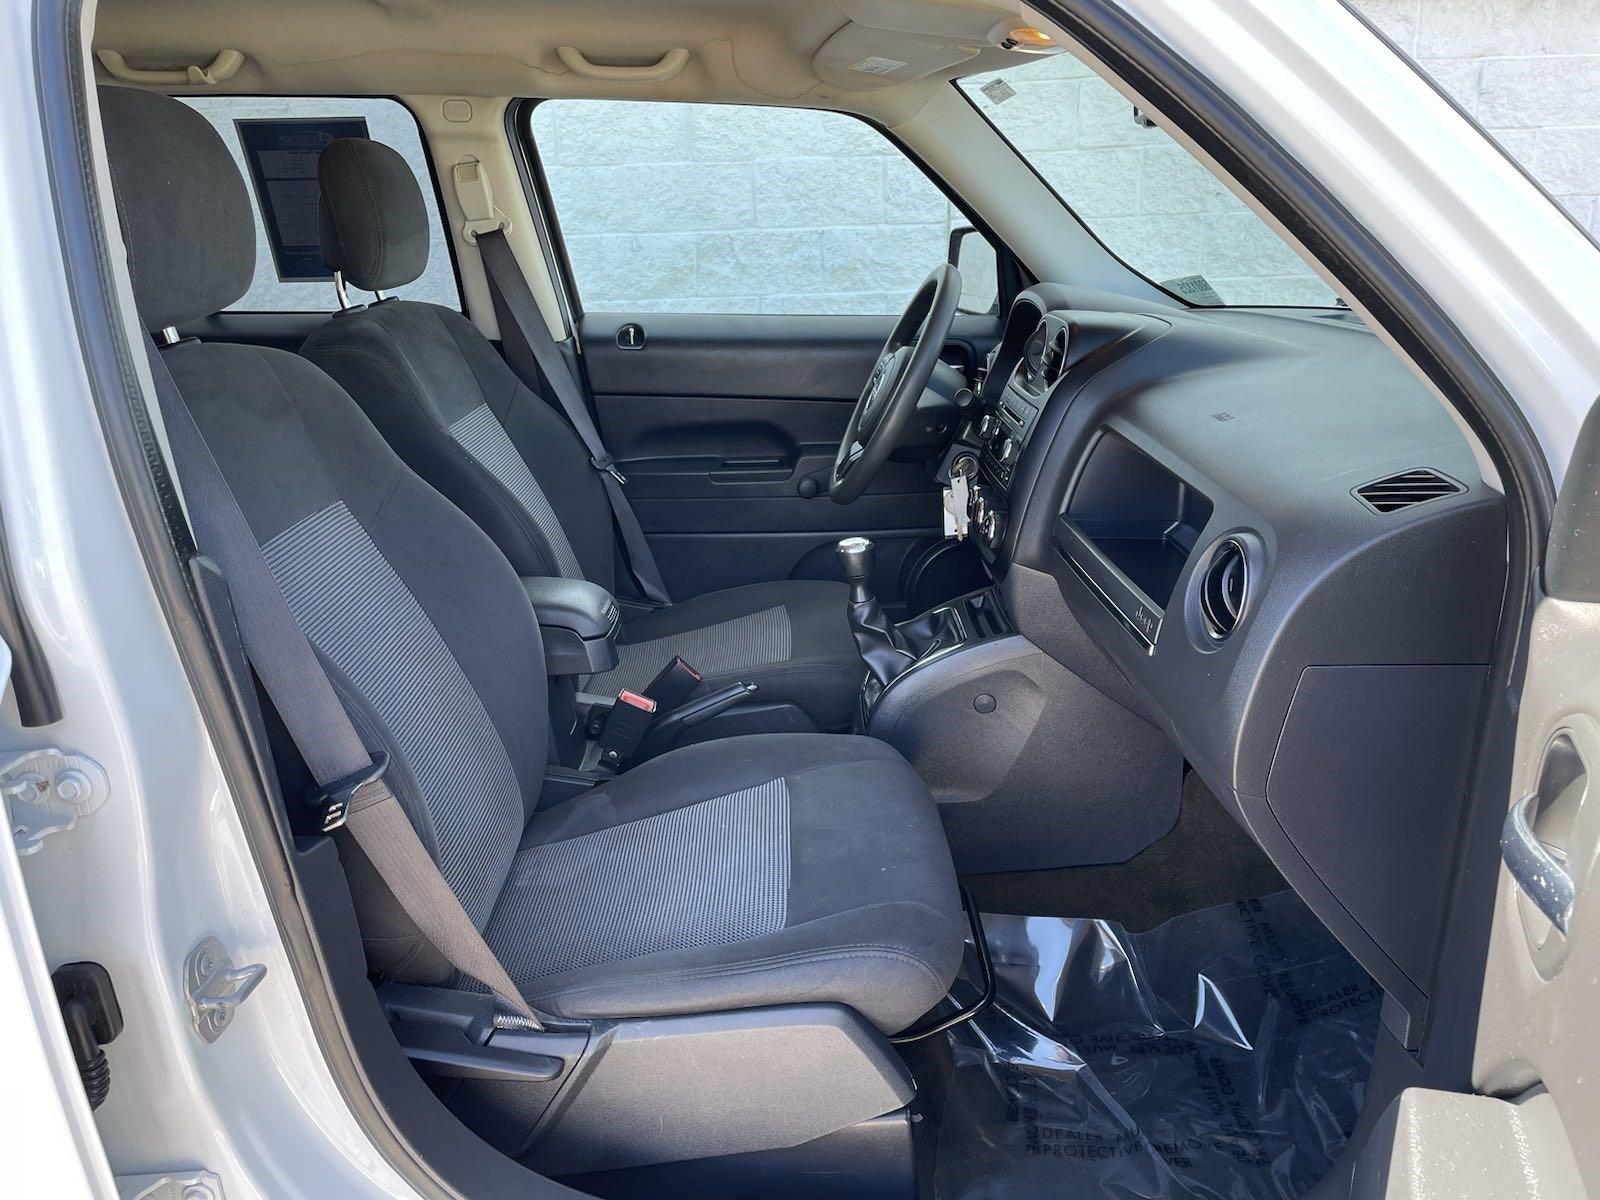 Used 2016 Jeep Patriot Sport SUV for sale in Lincoln NE